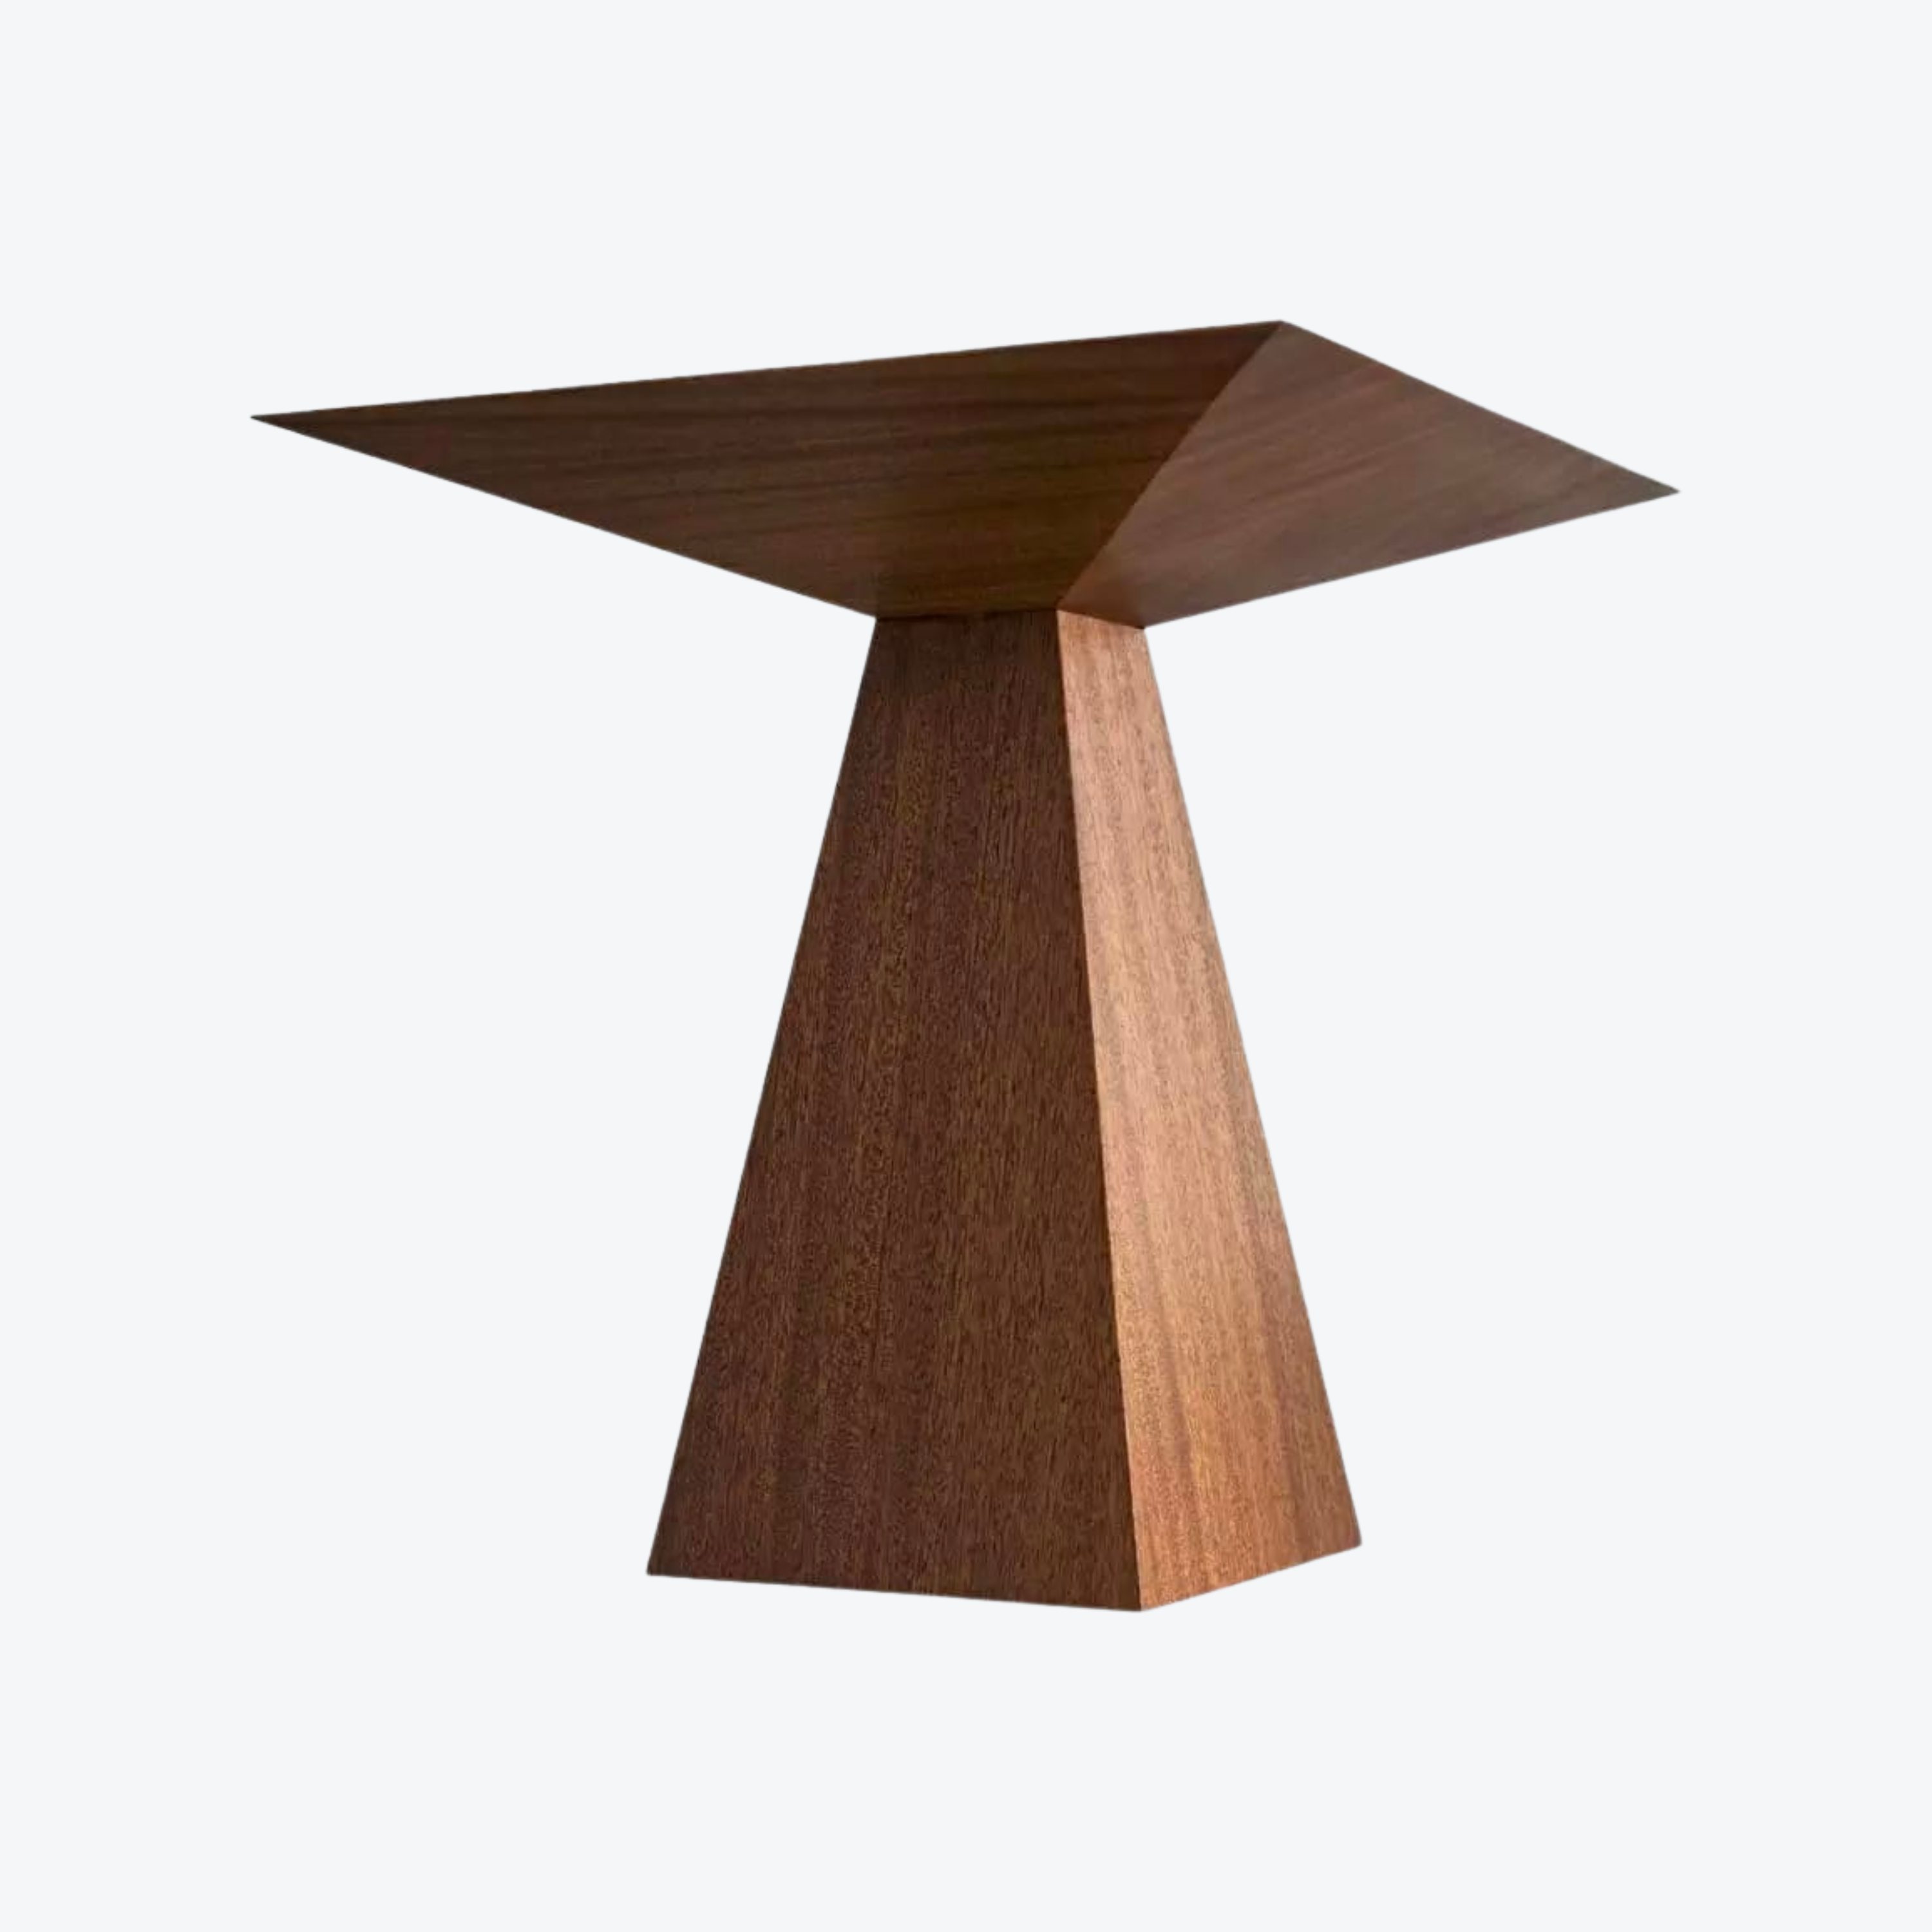 Lignage d'Hermes table, small model